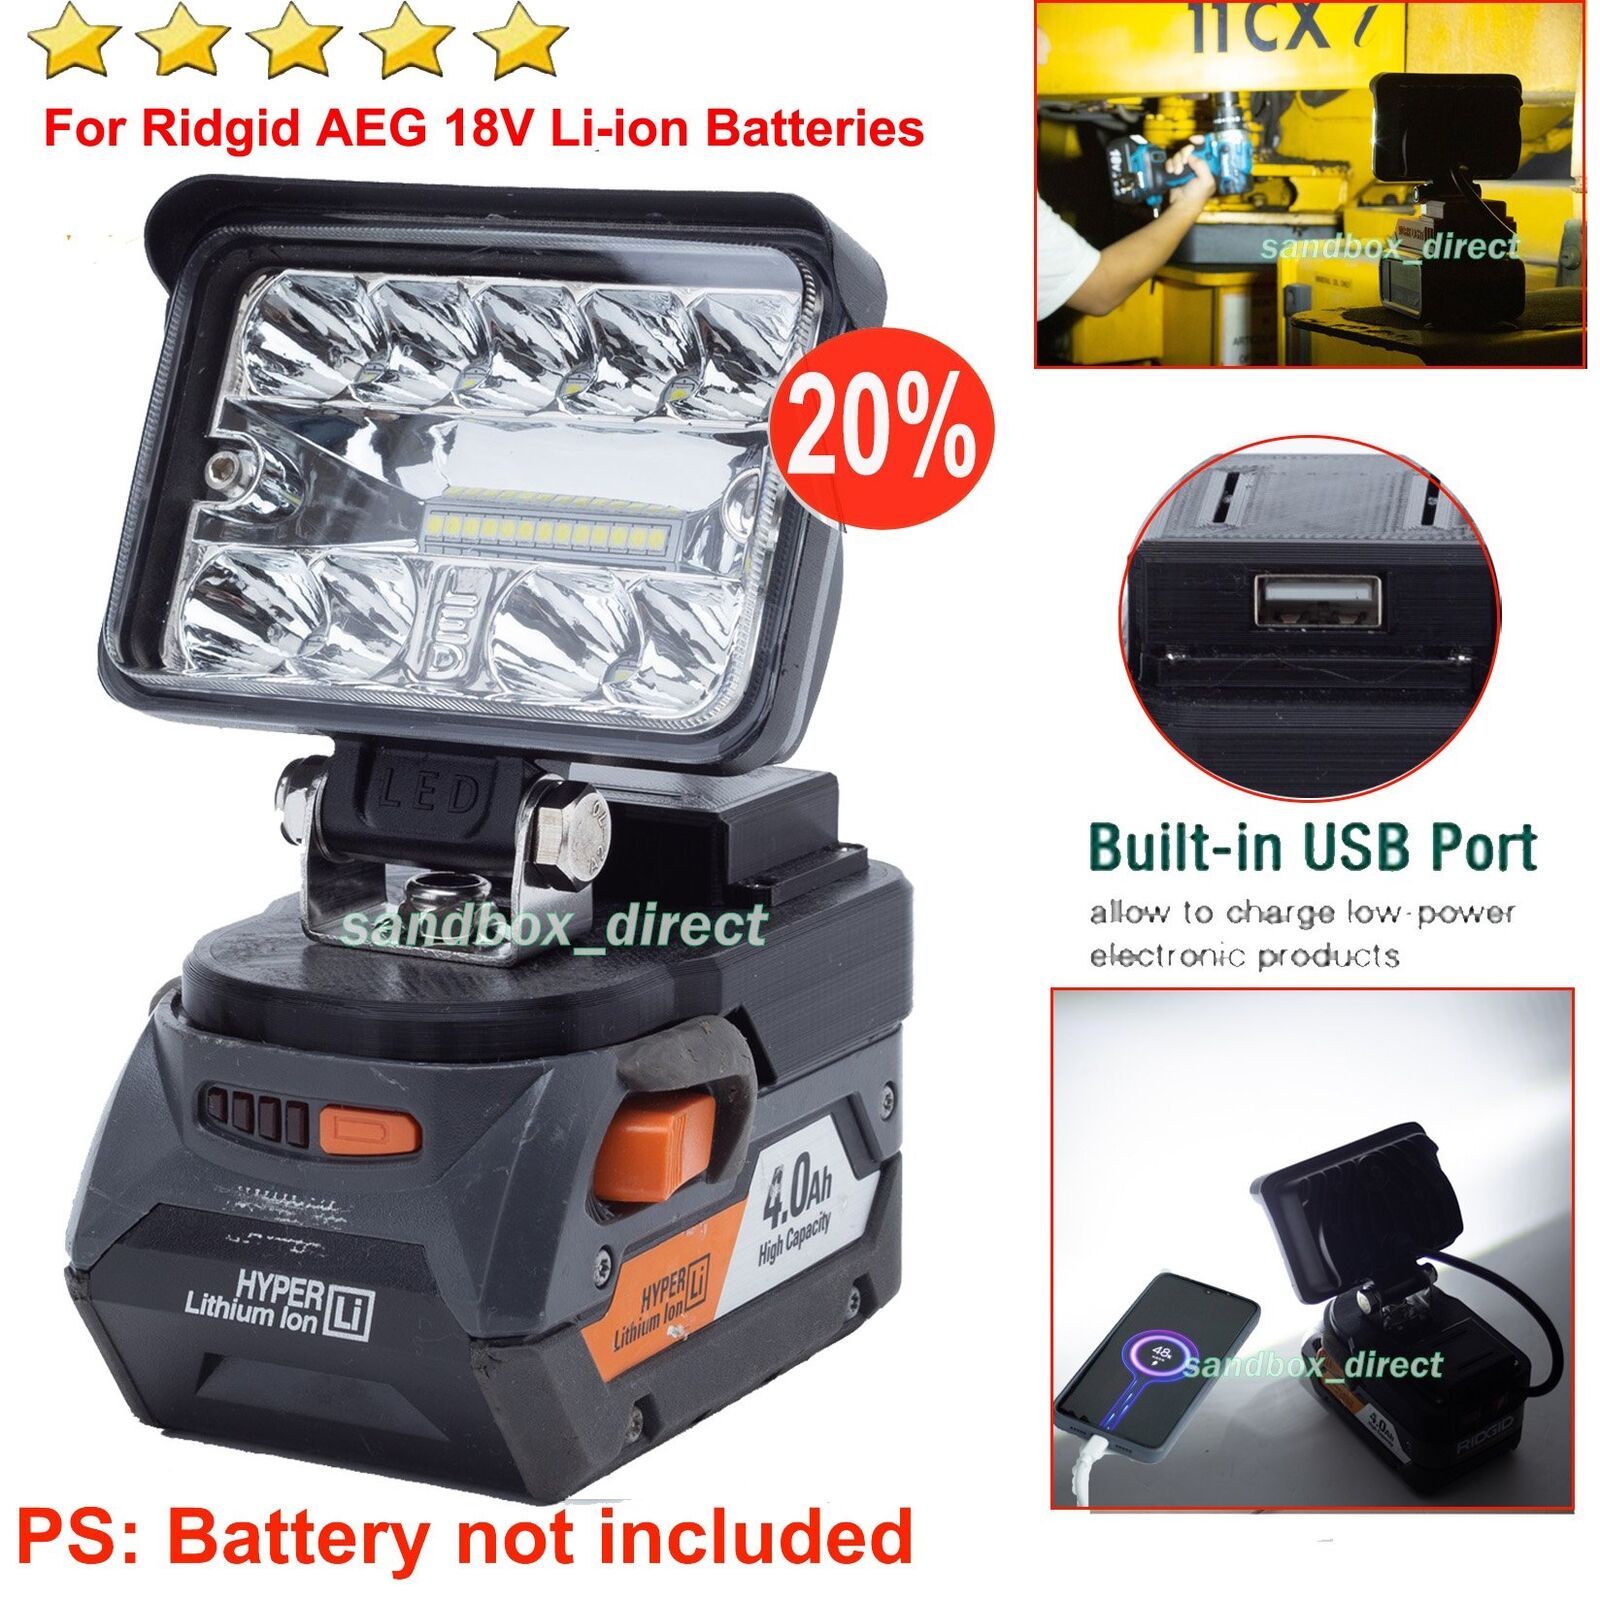 Super-Bright LED Work Light for Ridgid 18V Batteries 2800LM w/FAST CHARGE USB